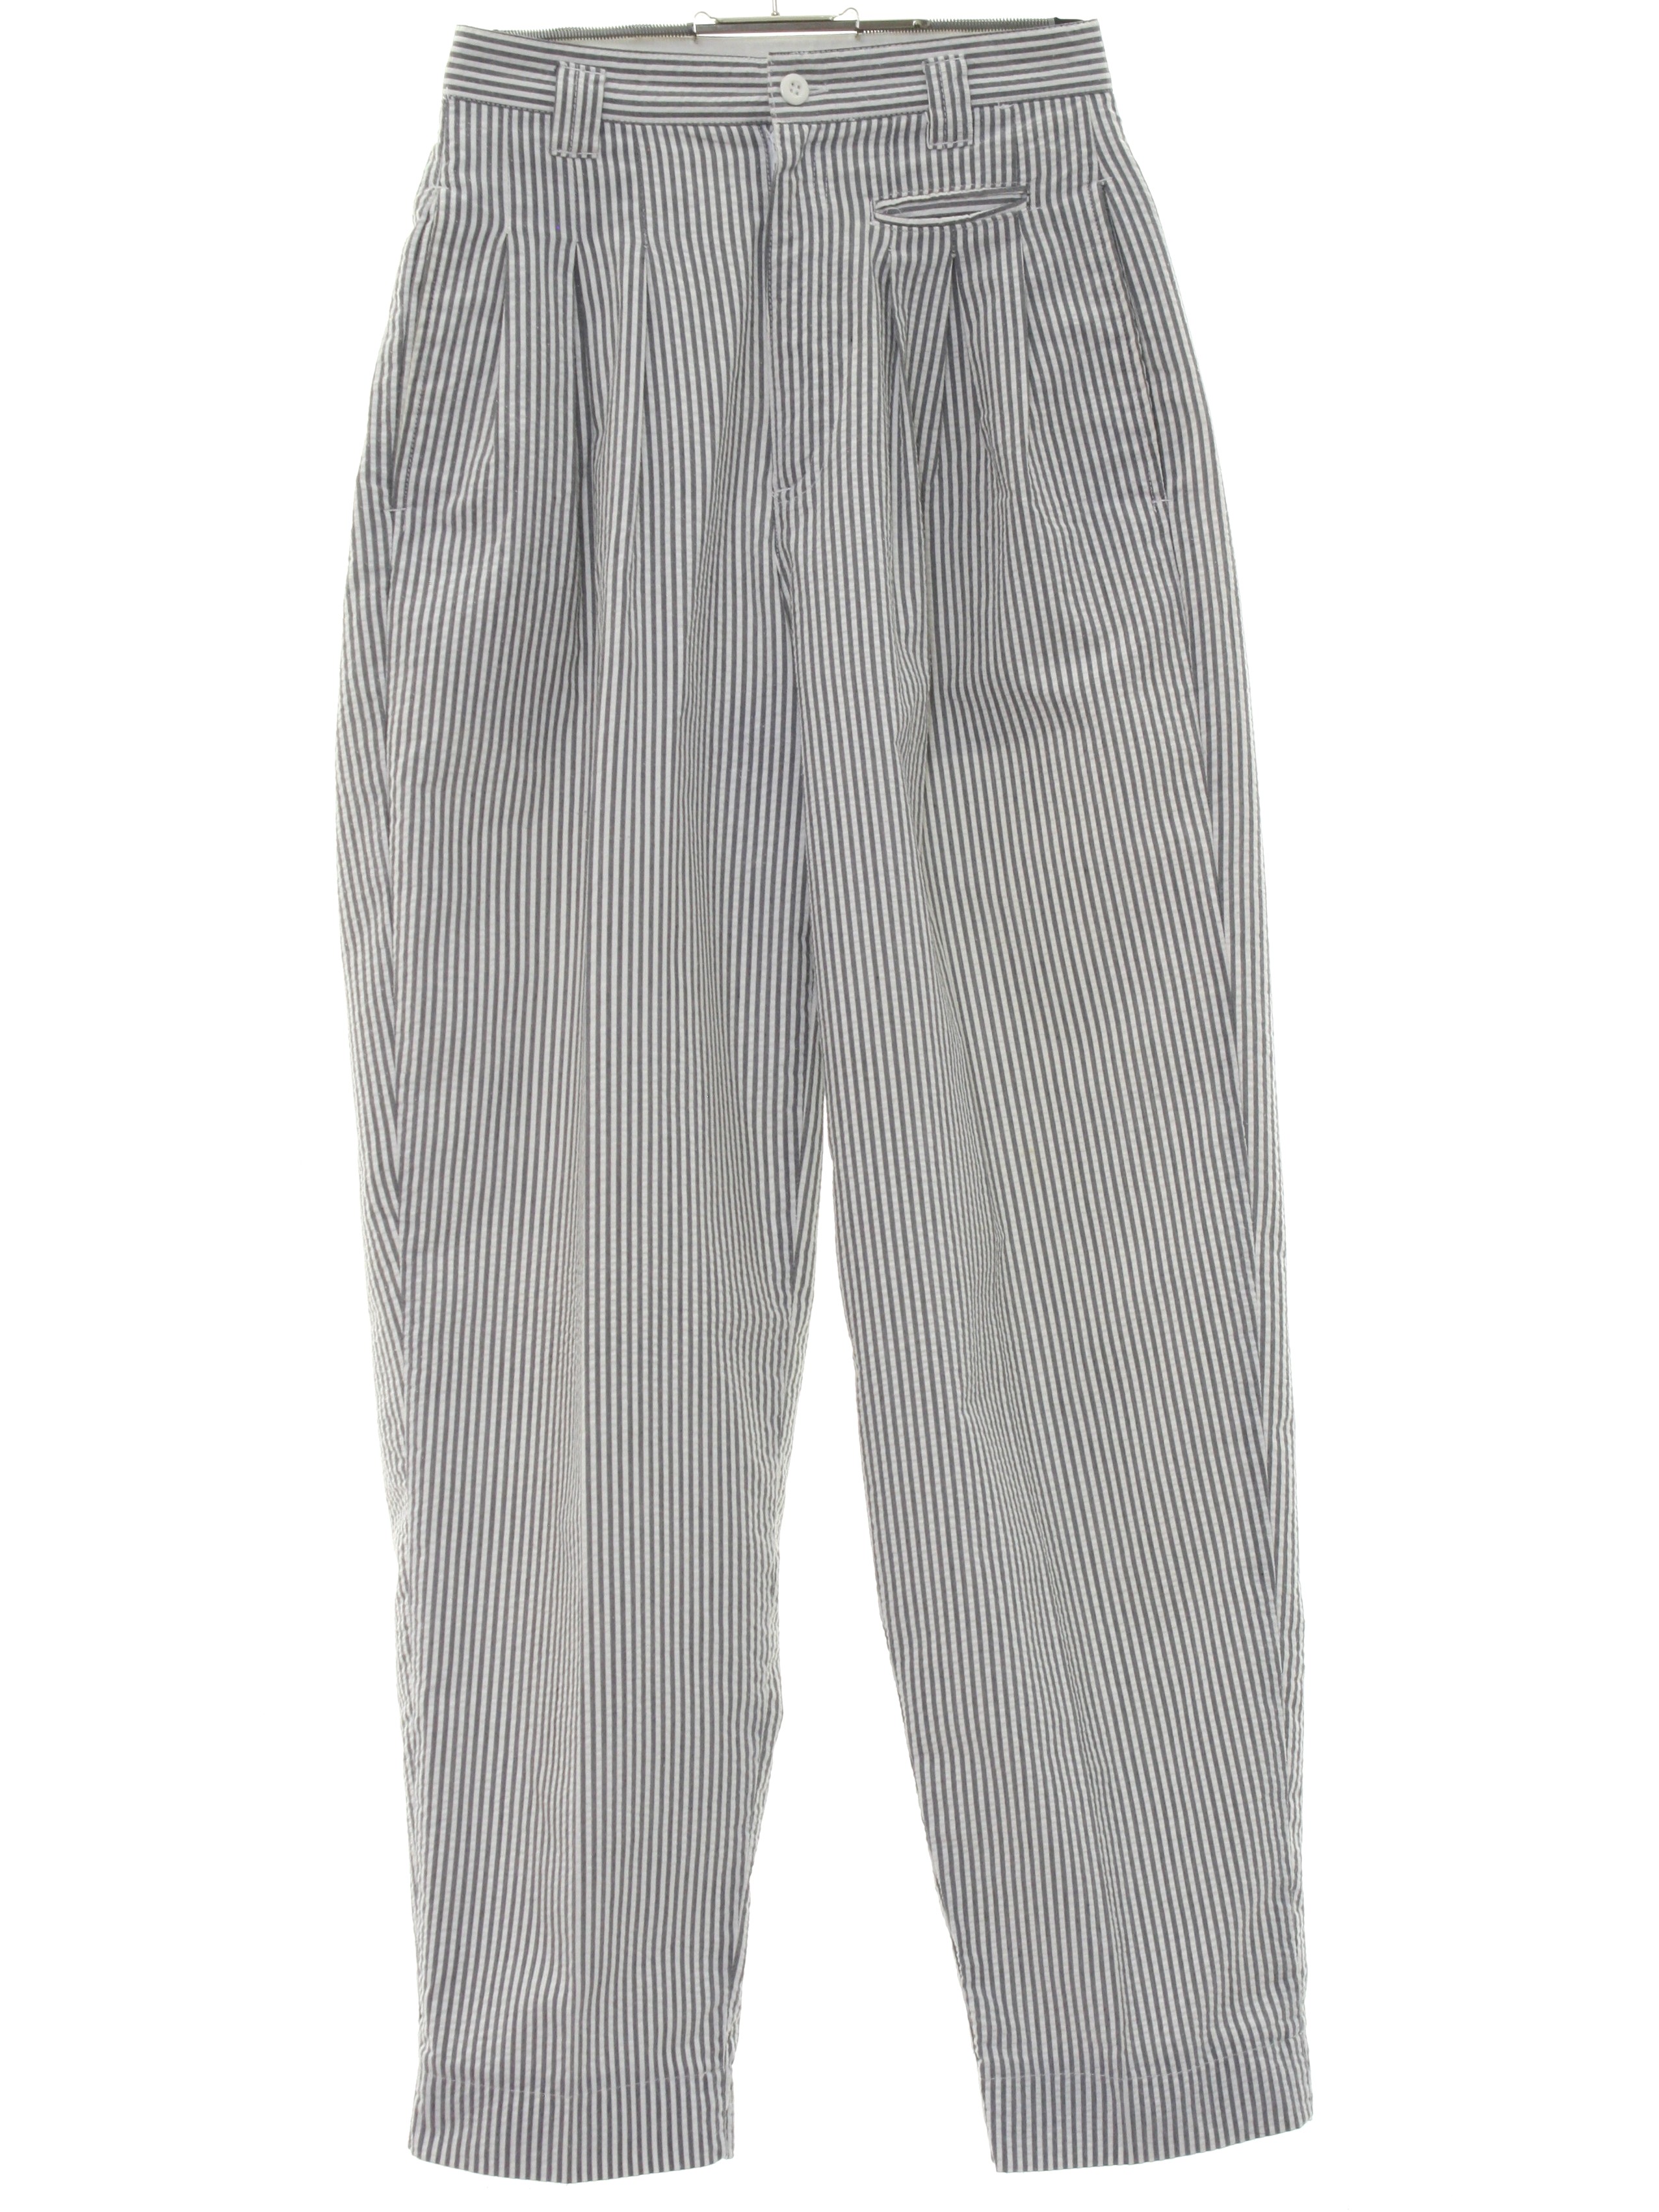 Retro Eighties Pants: 80s -Preppy Boys- Womens grey and white ...